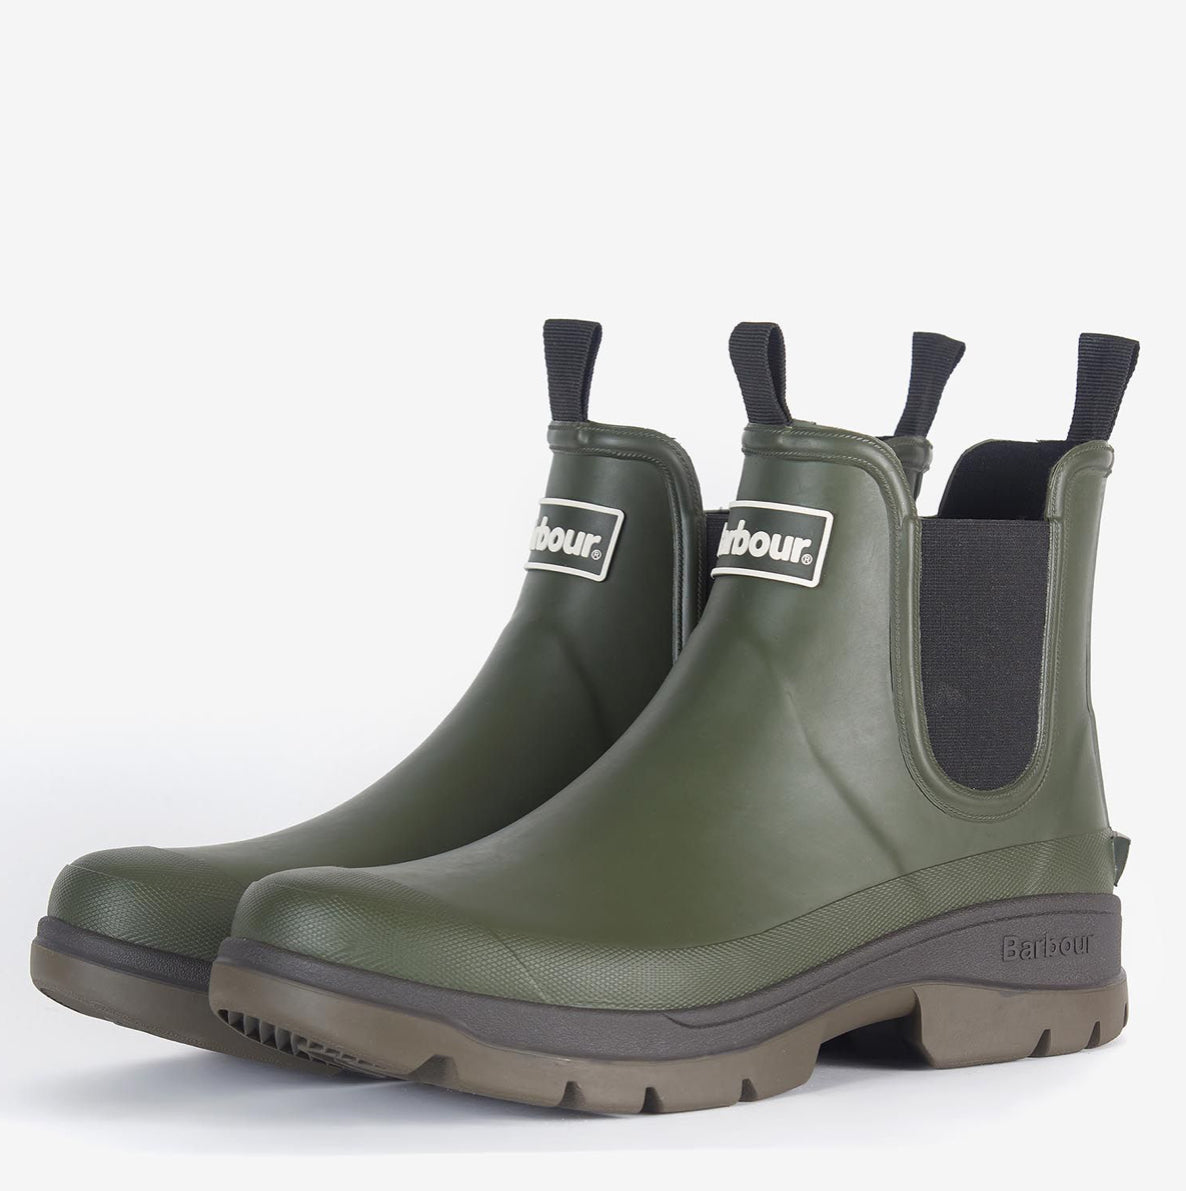 Barbour - Nimbus boots